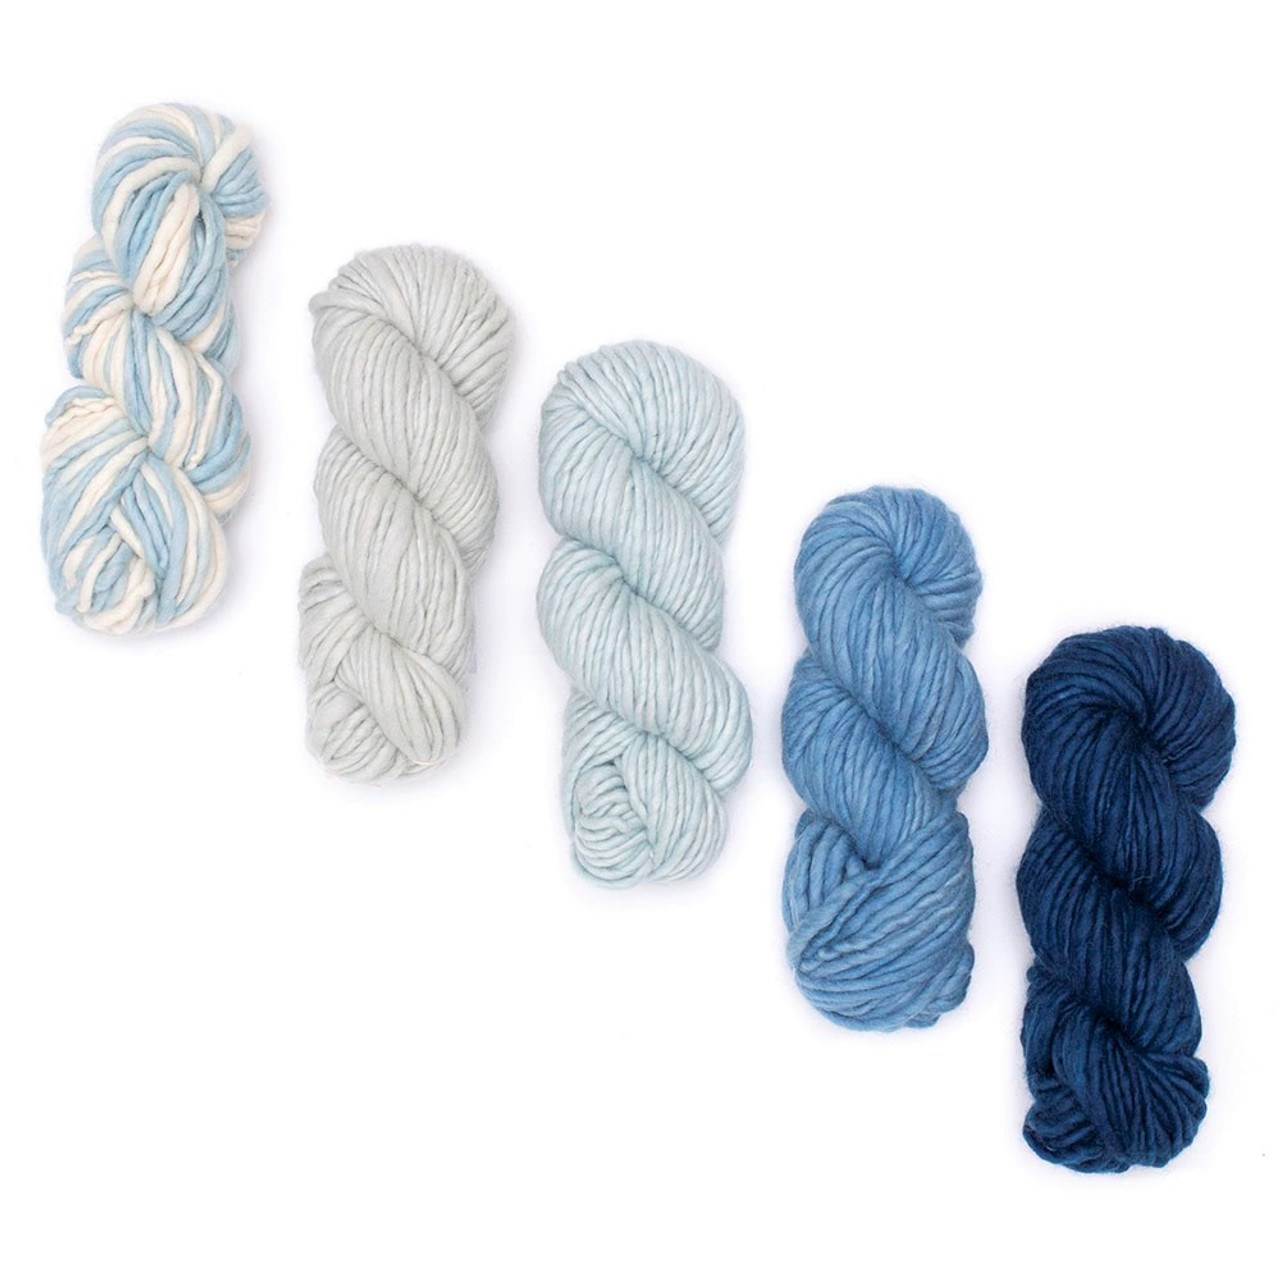 Flora Cake Yarn  Vlnika - yarn, wool warehouse - buy all of your yarn  wool, needles, and other knitting supplies online